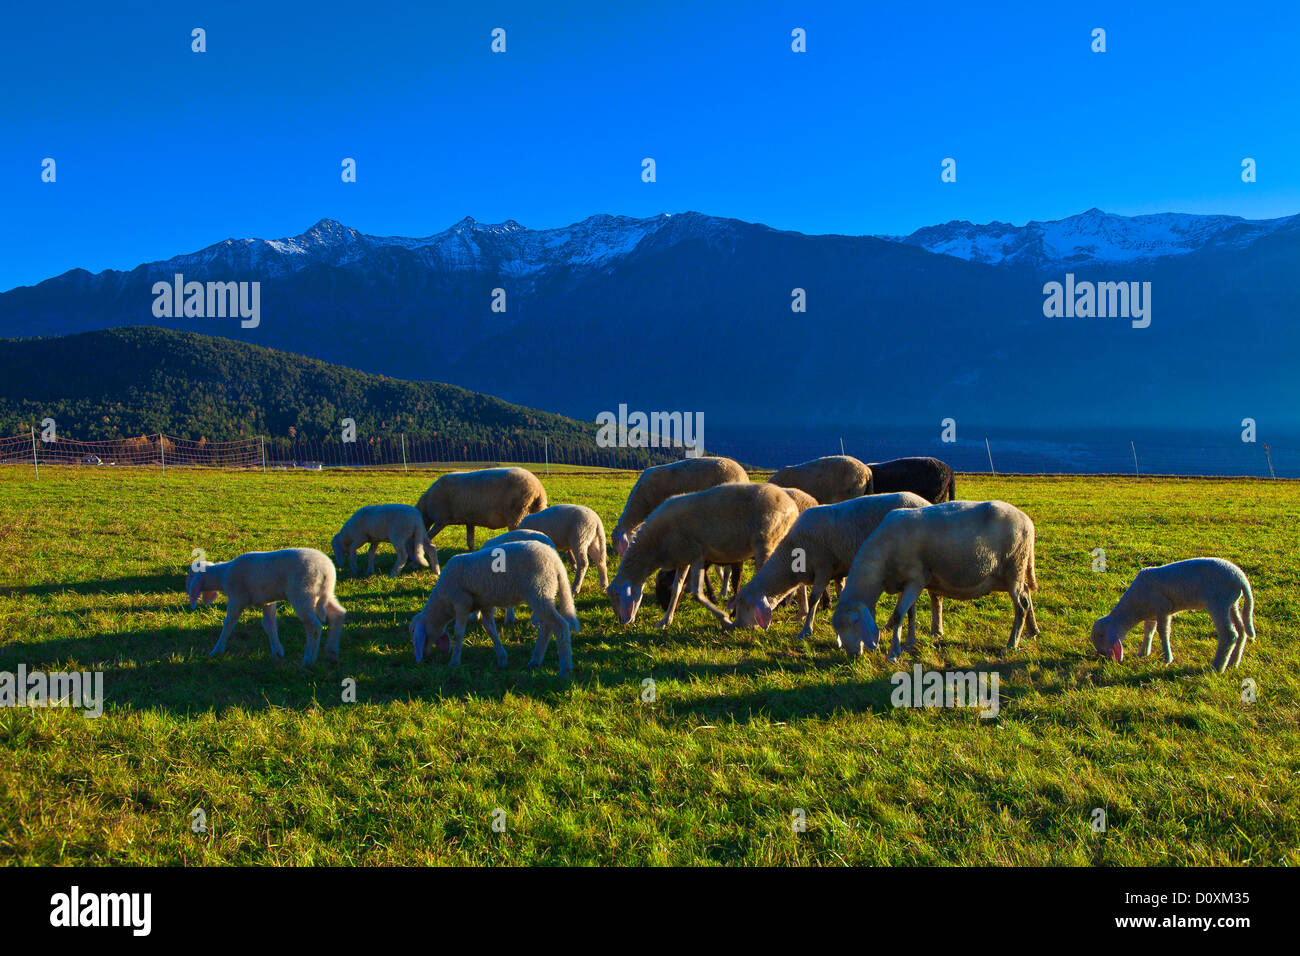 Austria, Europe, Tyrol, Tirol, Mieming, chain, plateau, Mieming, pasture, willow, sheep, meadow, mountains, Stubai Alps, snow, a Stock Photo